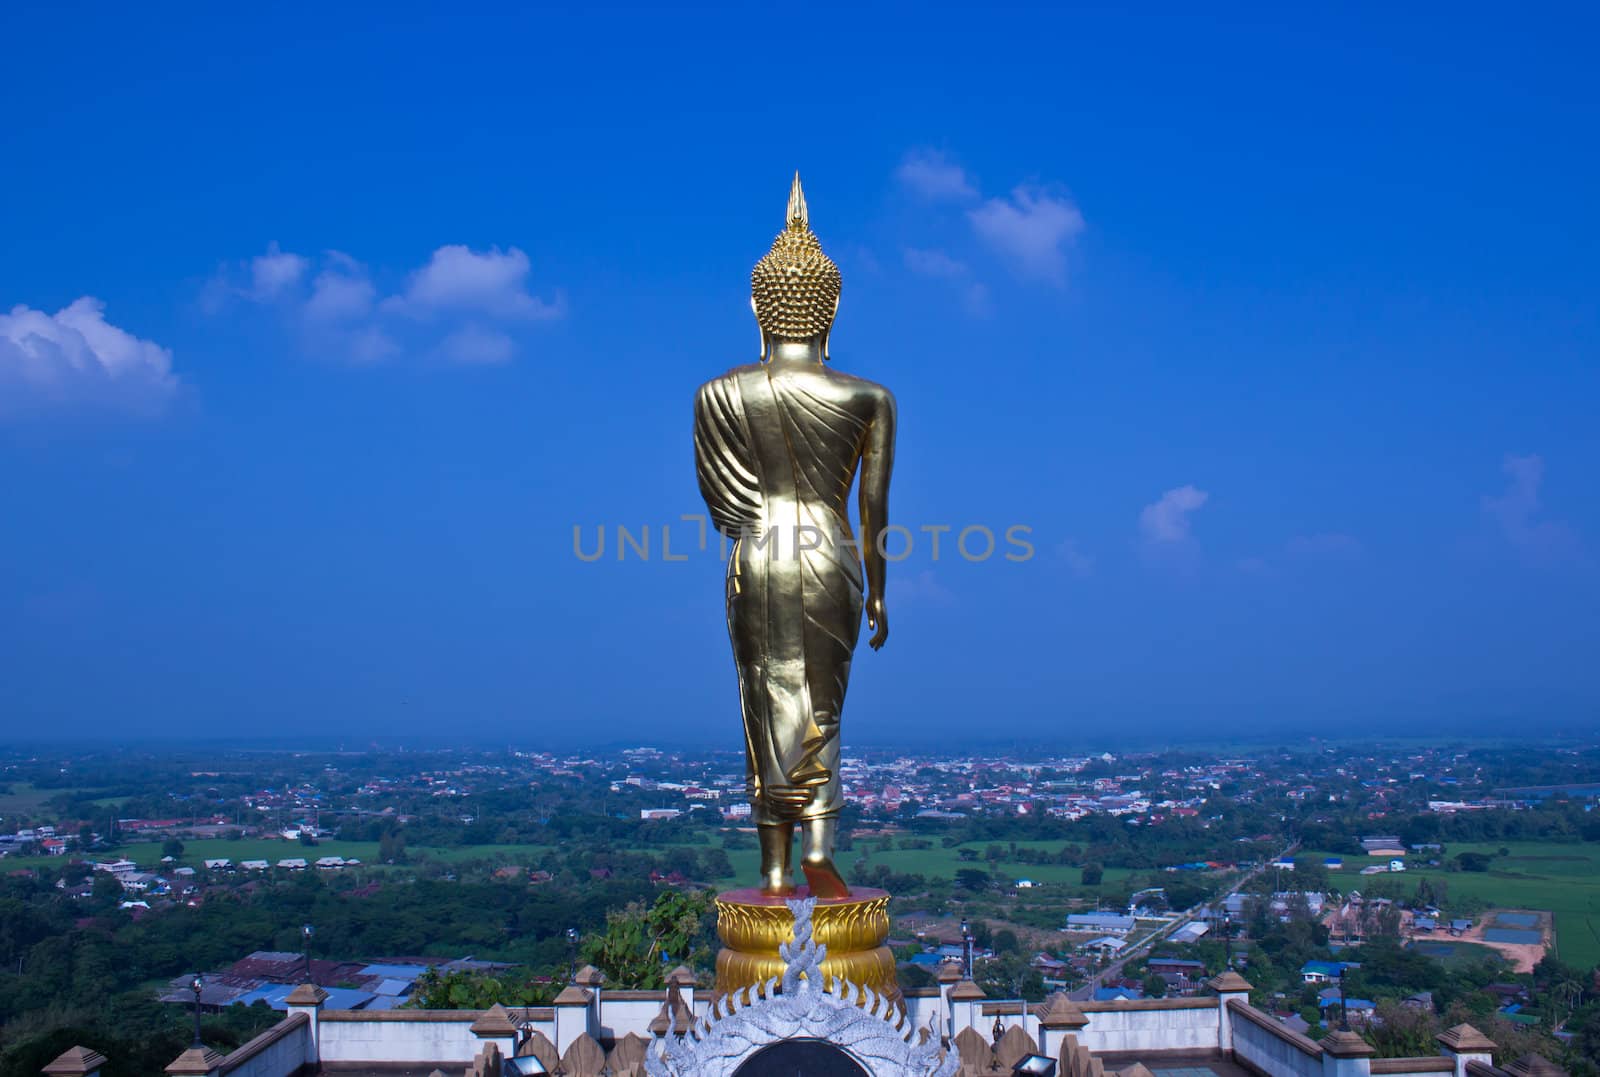 Black golden buddha statue against blue sky in thai temple